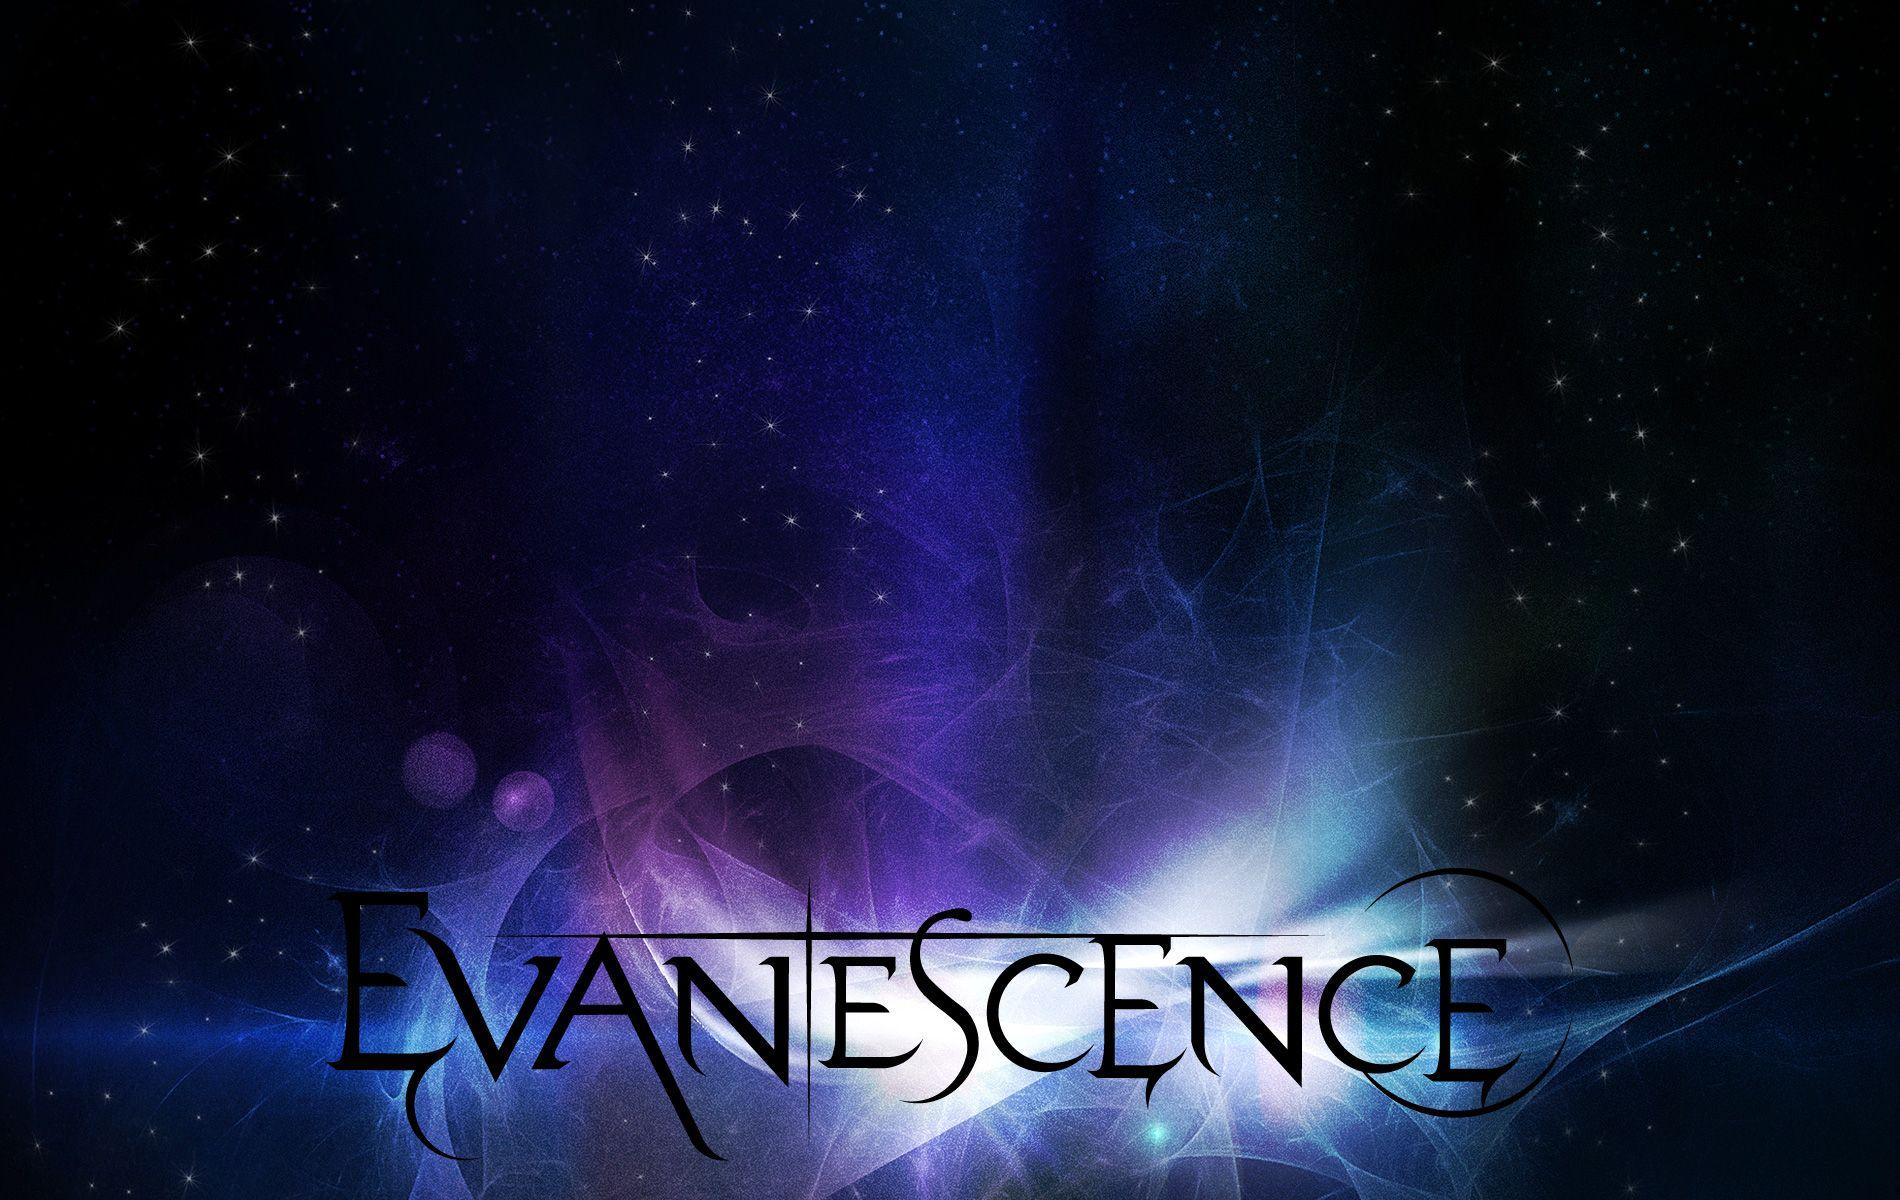 Evanescence Symbol Desktop Wallpaper 1900x1200